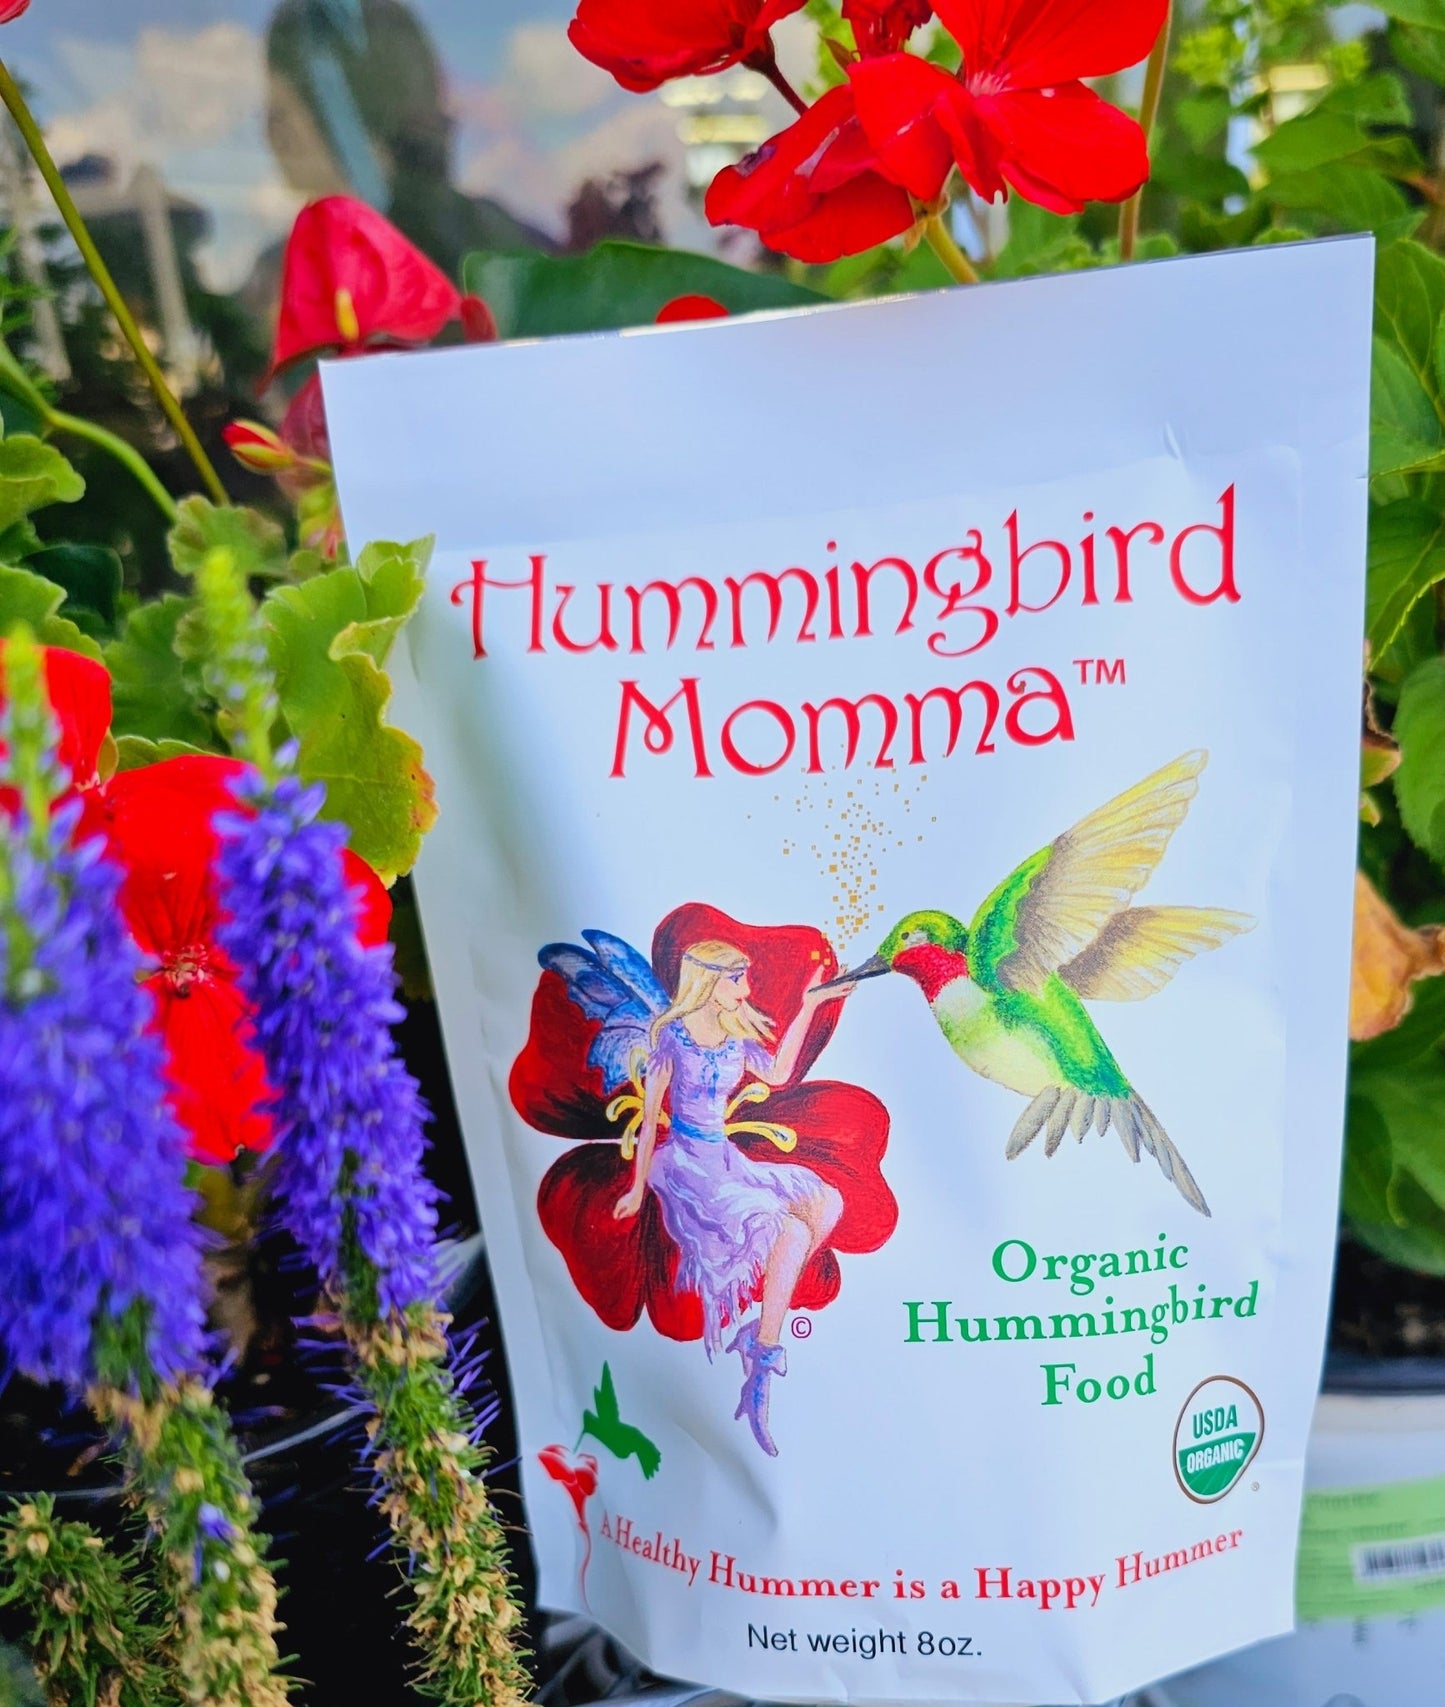 Hummingbird Momma’s “Money Saver” - 20 count - Hummingbird Momma